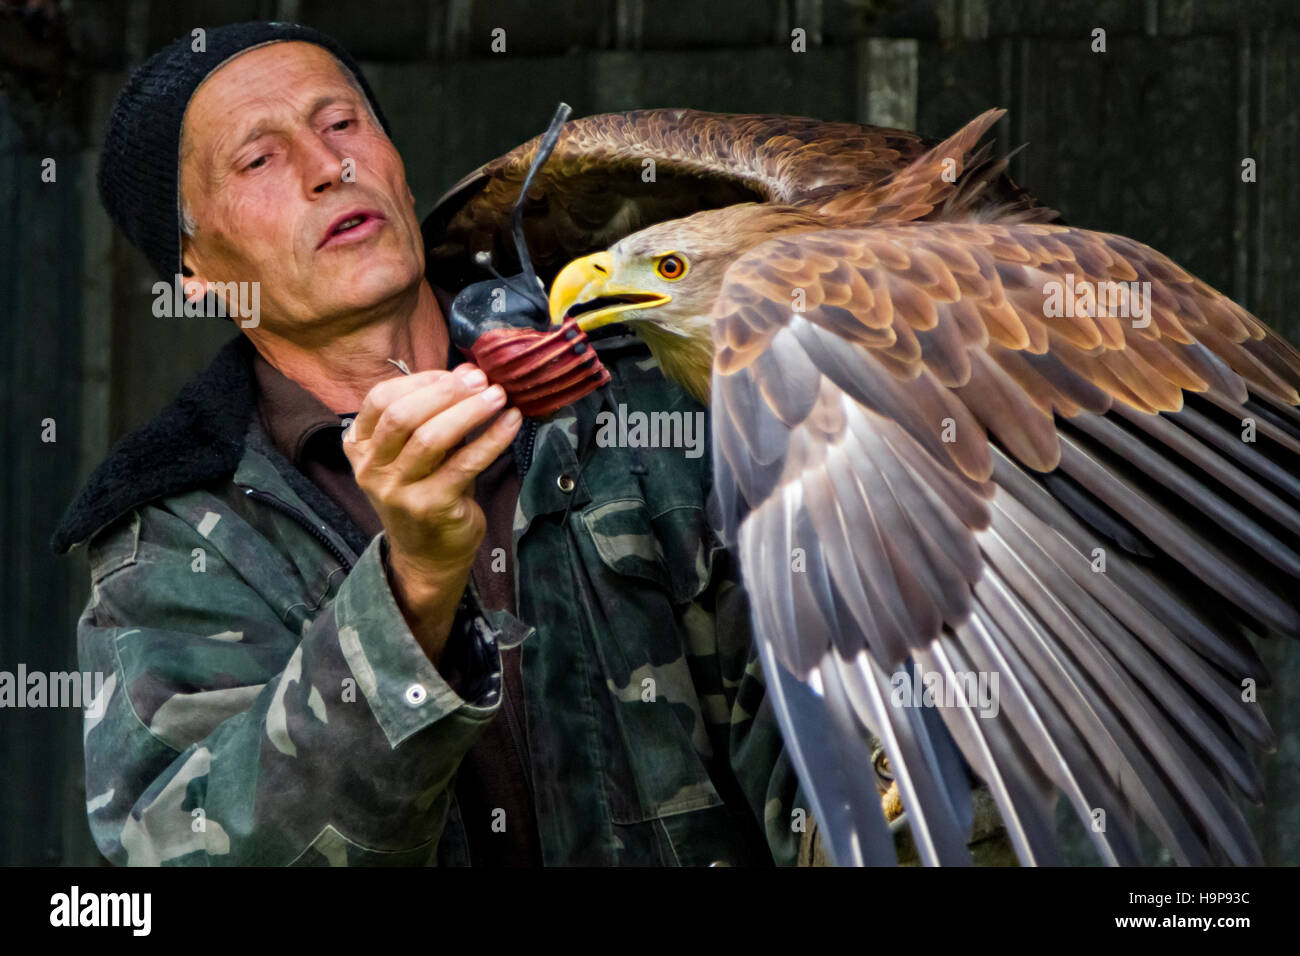 Kazakh eagle hunter putting the hood over the beak of the golden eagle, Almaty, Kazakhstan Stock Photo